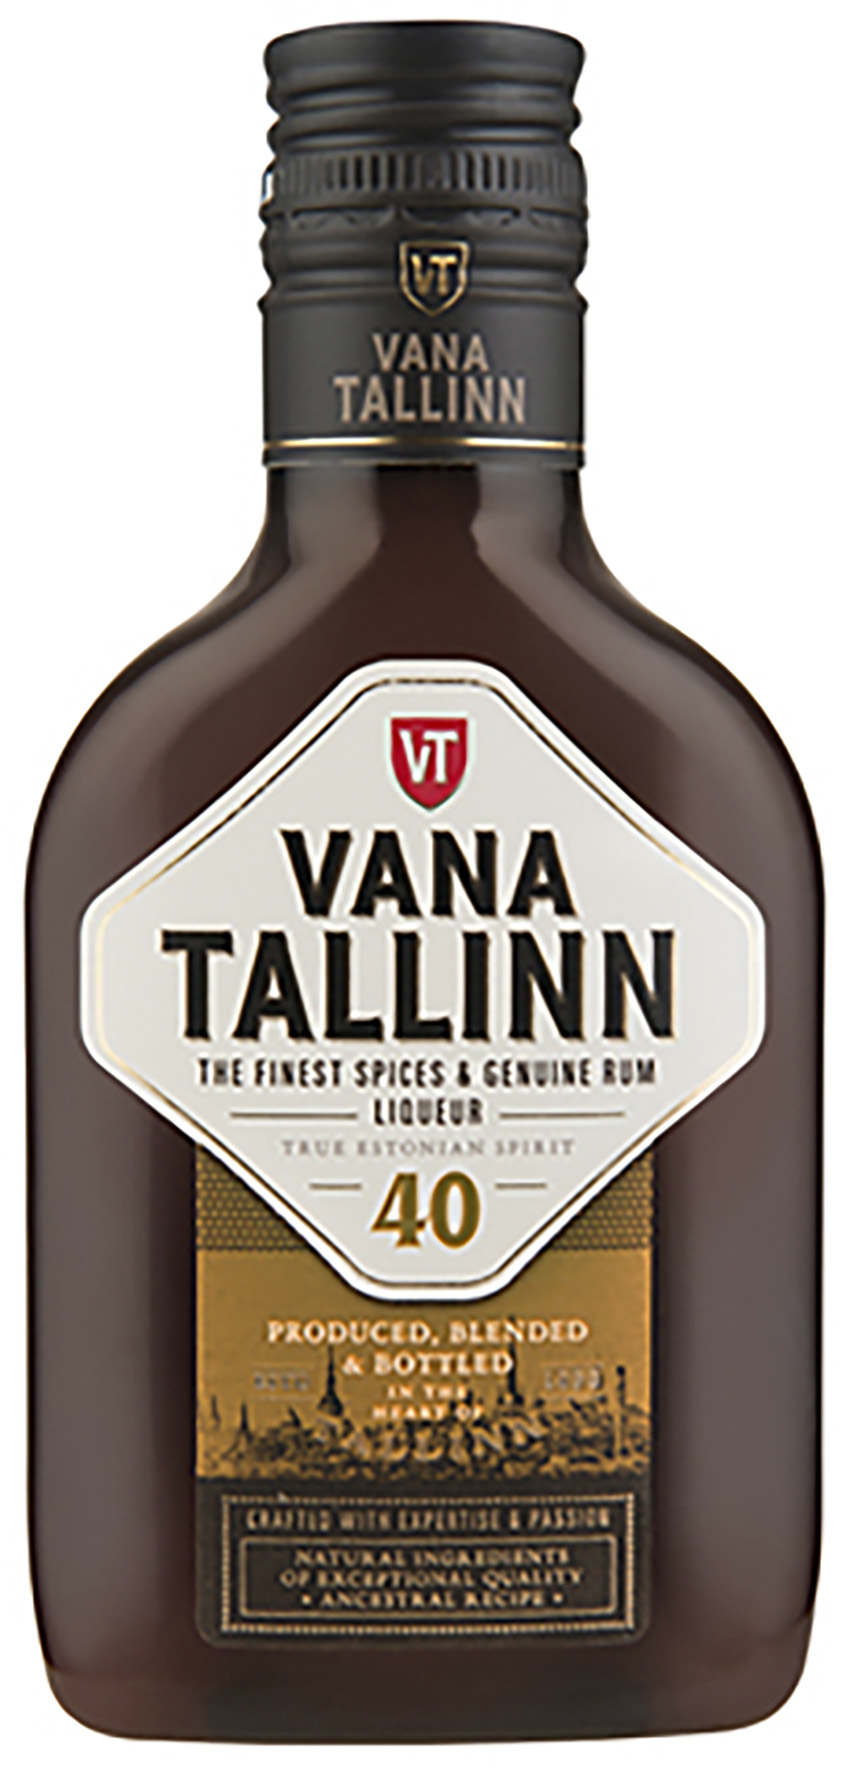 Vana Tallinn plastic bottle